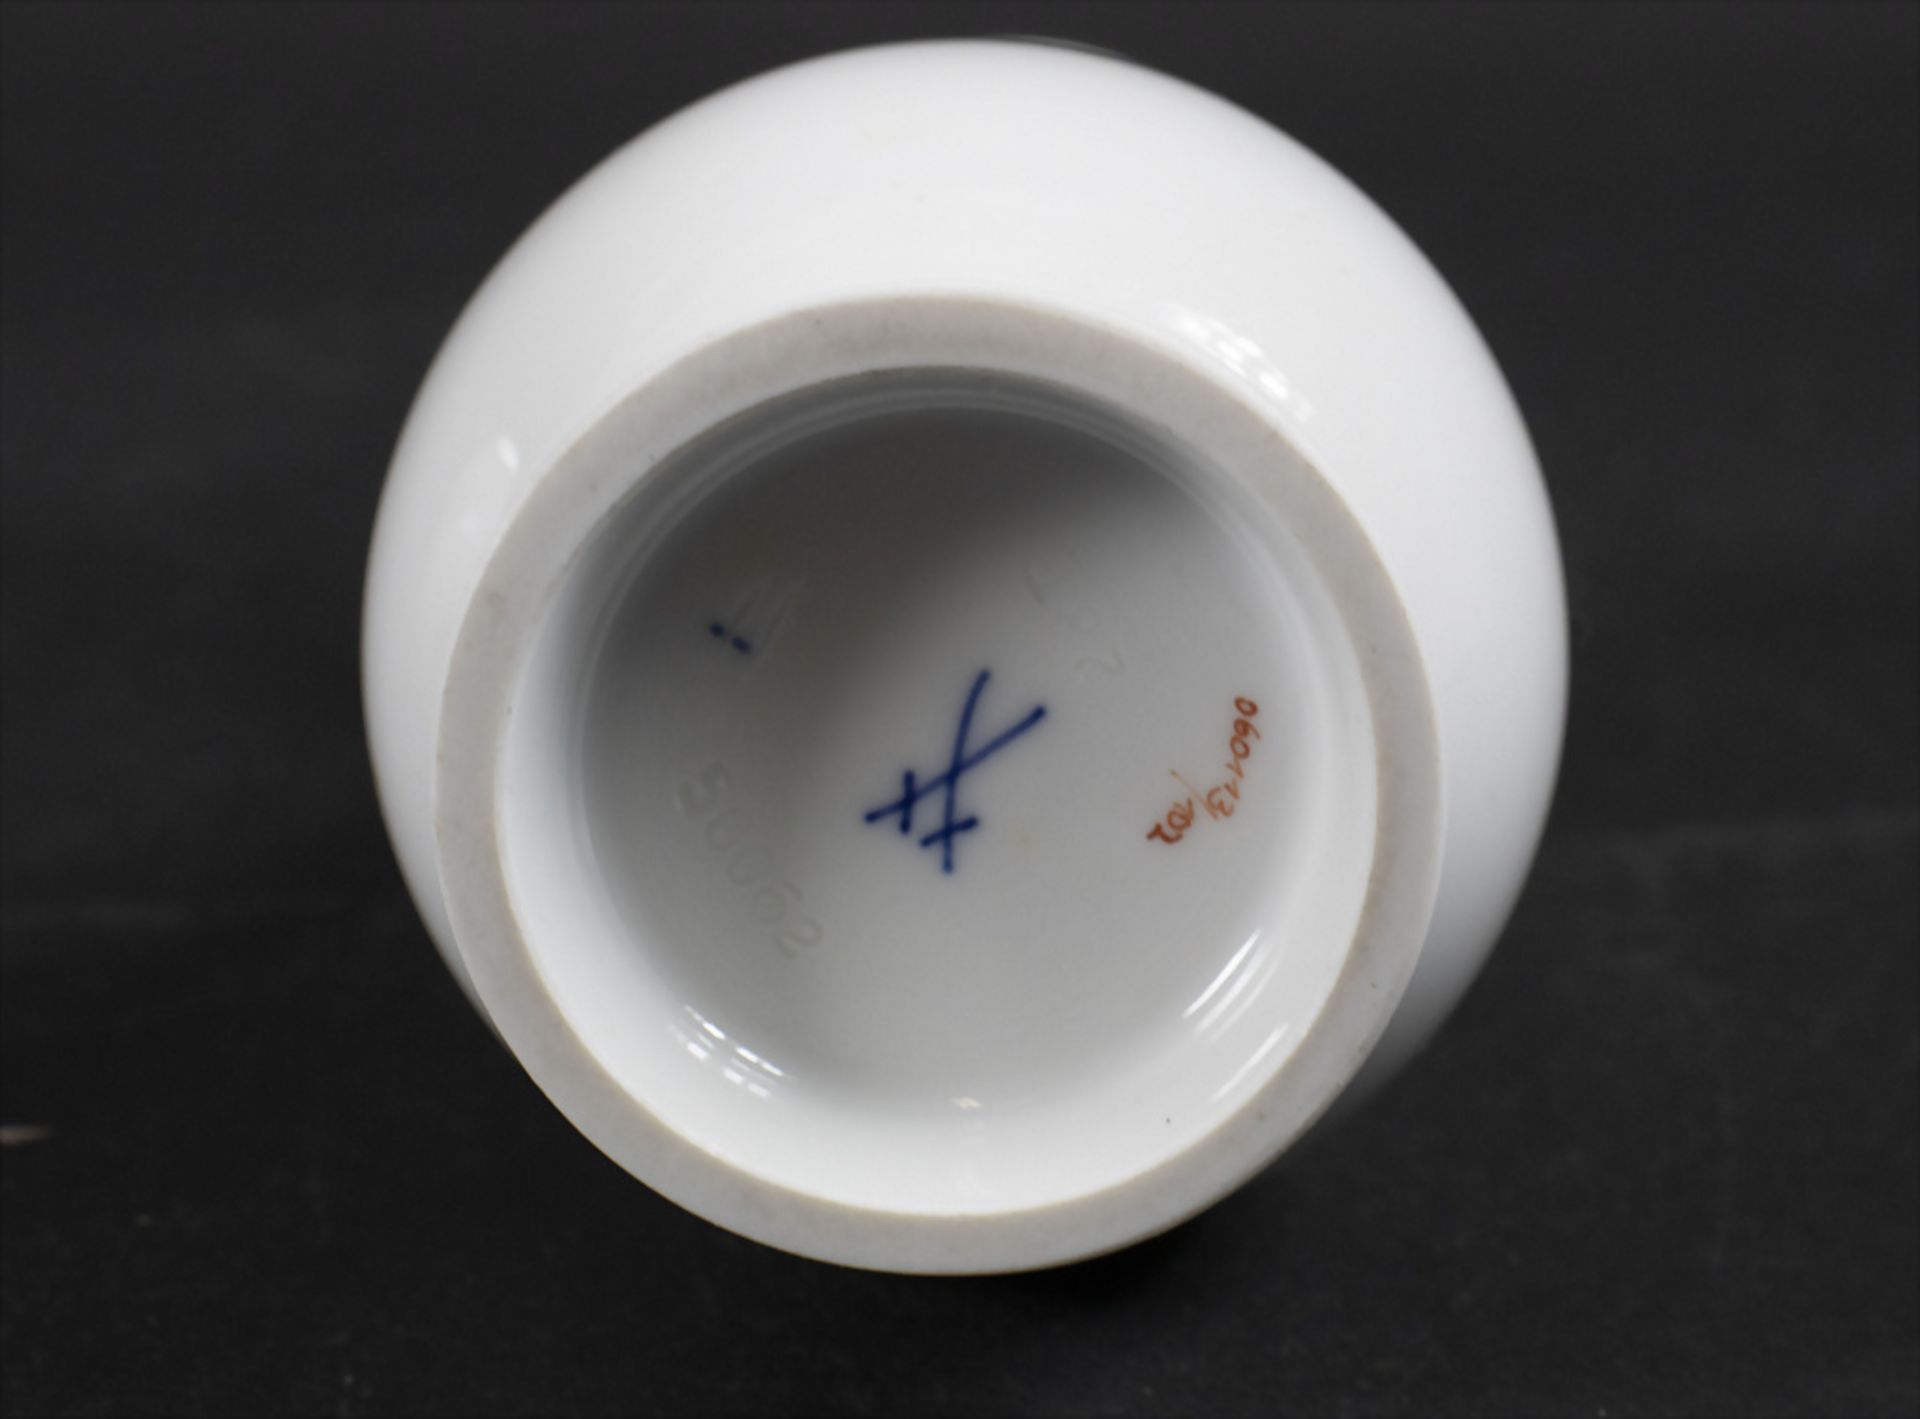 2 Porzellanvasen / Two porcelain vases, Meissen u. KPM Berlin - Image 3 of 3